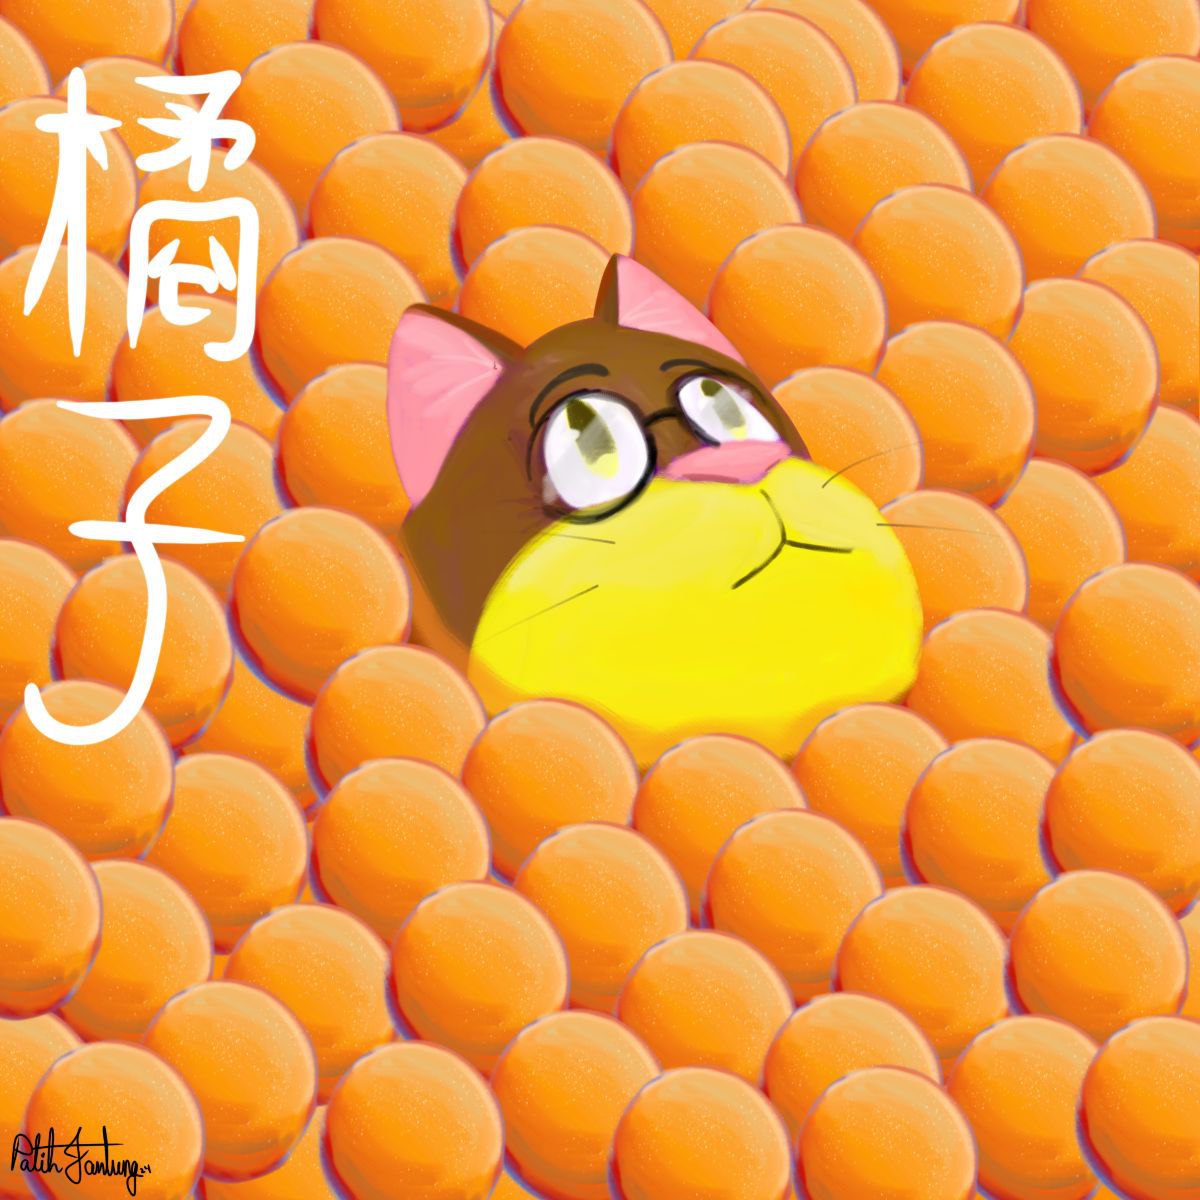 Anime Girl Loves Oranges Anime Art, Anime Character, Japanese Pop Culture,  Funny Anime, Anime Decor, INSTANT DOWNLOAD - Etsy